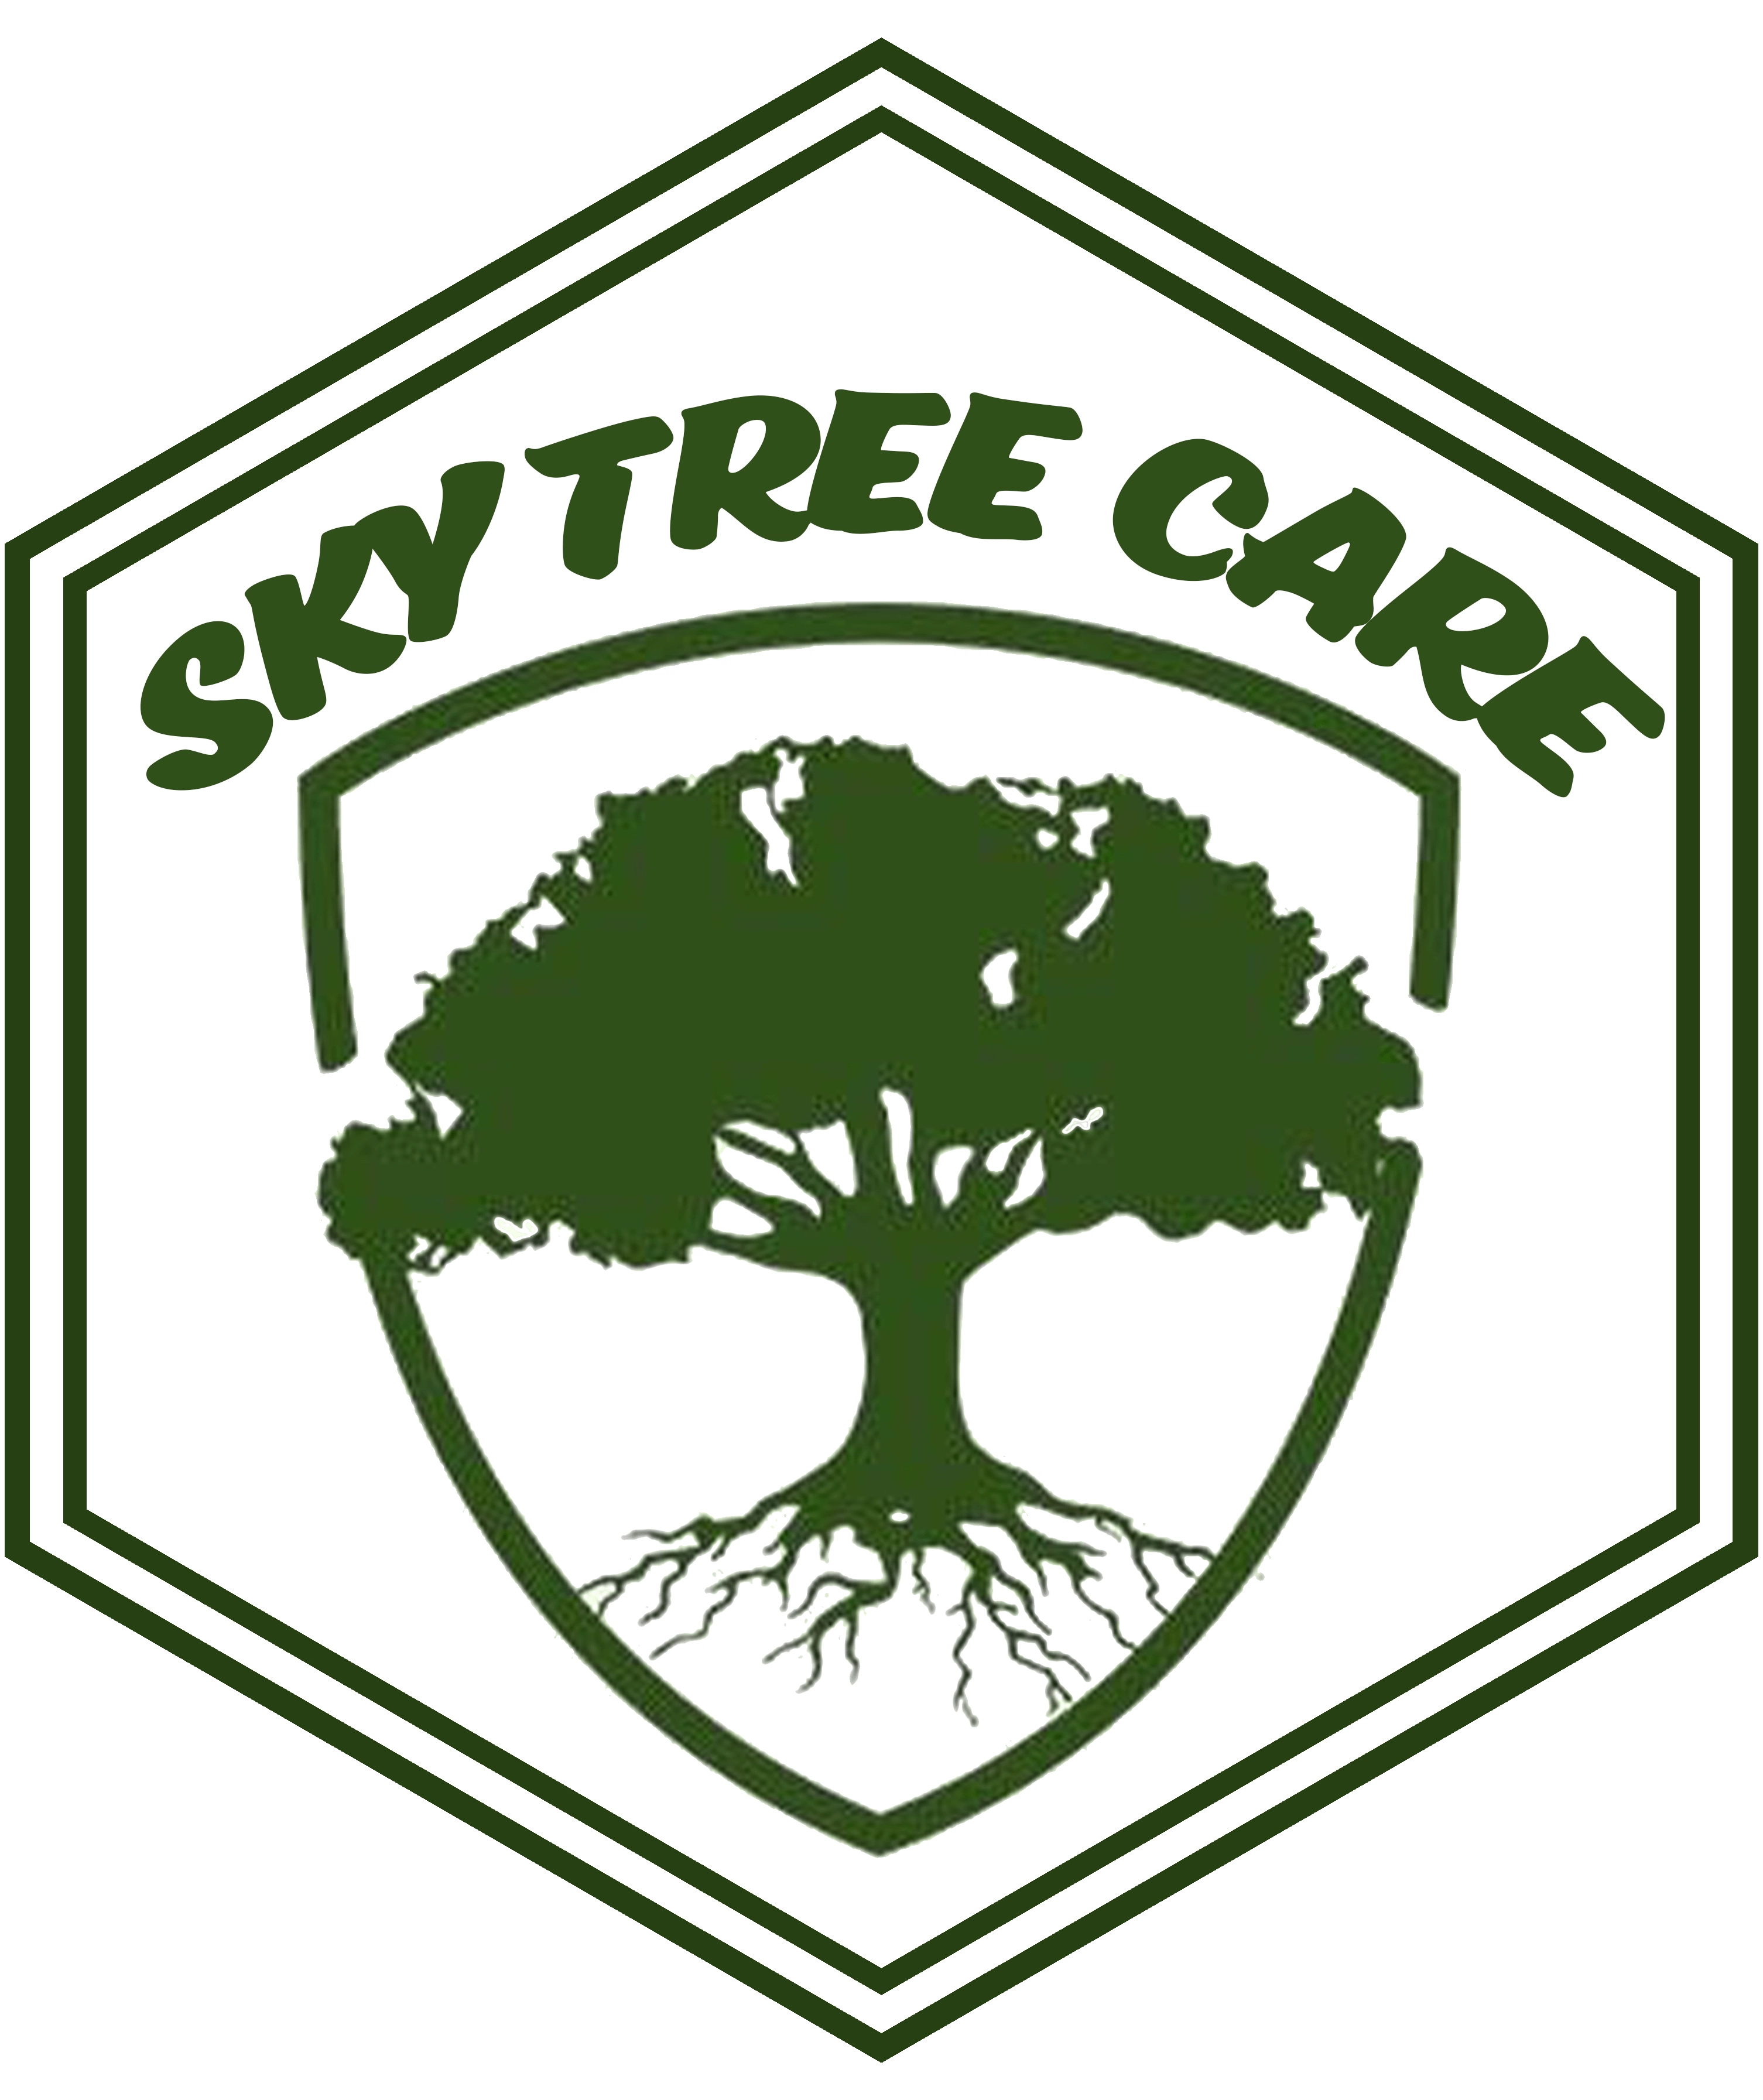 Sky Tree Care Logo